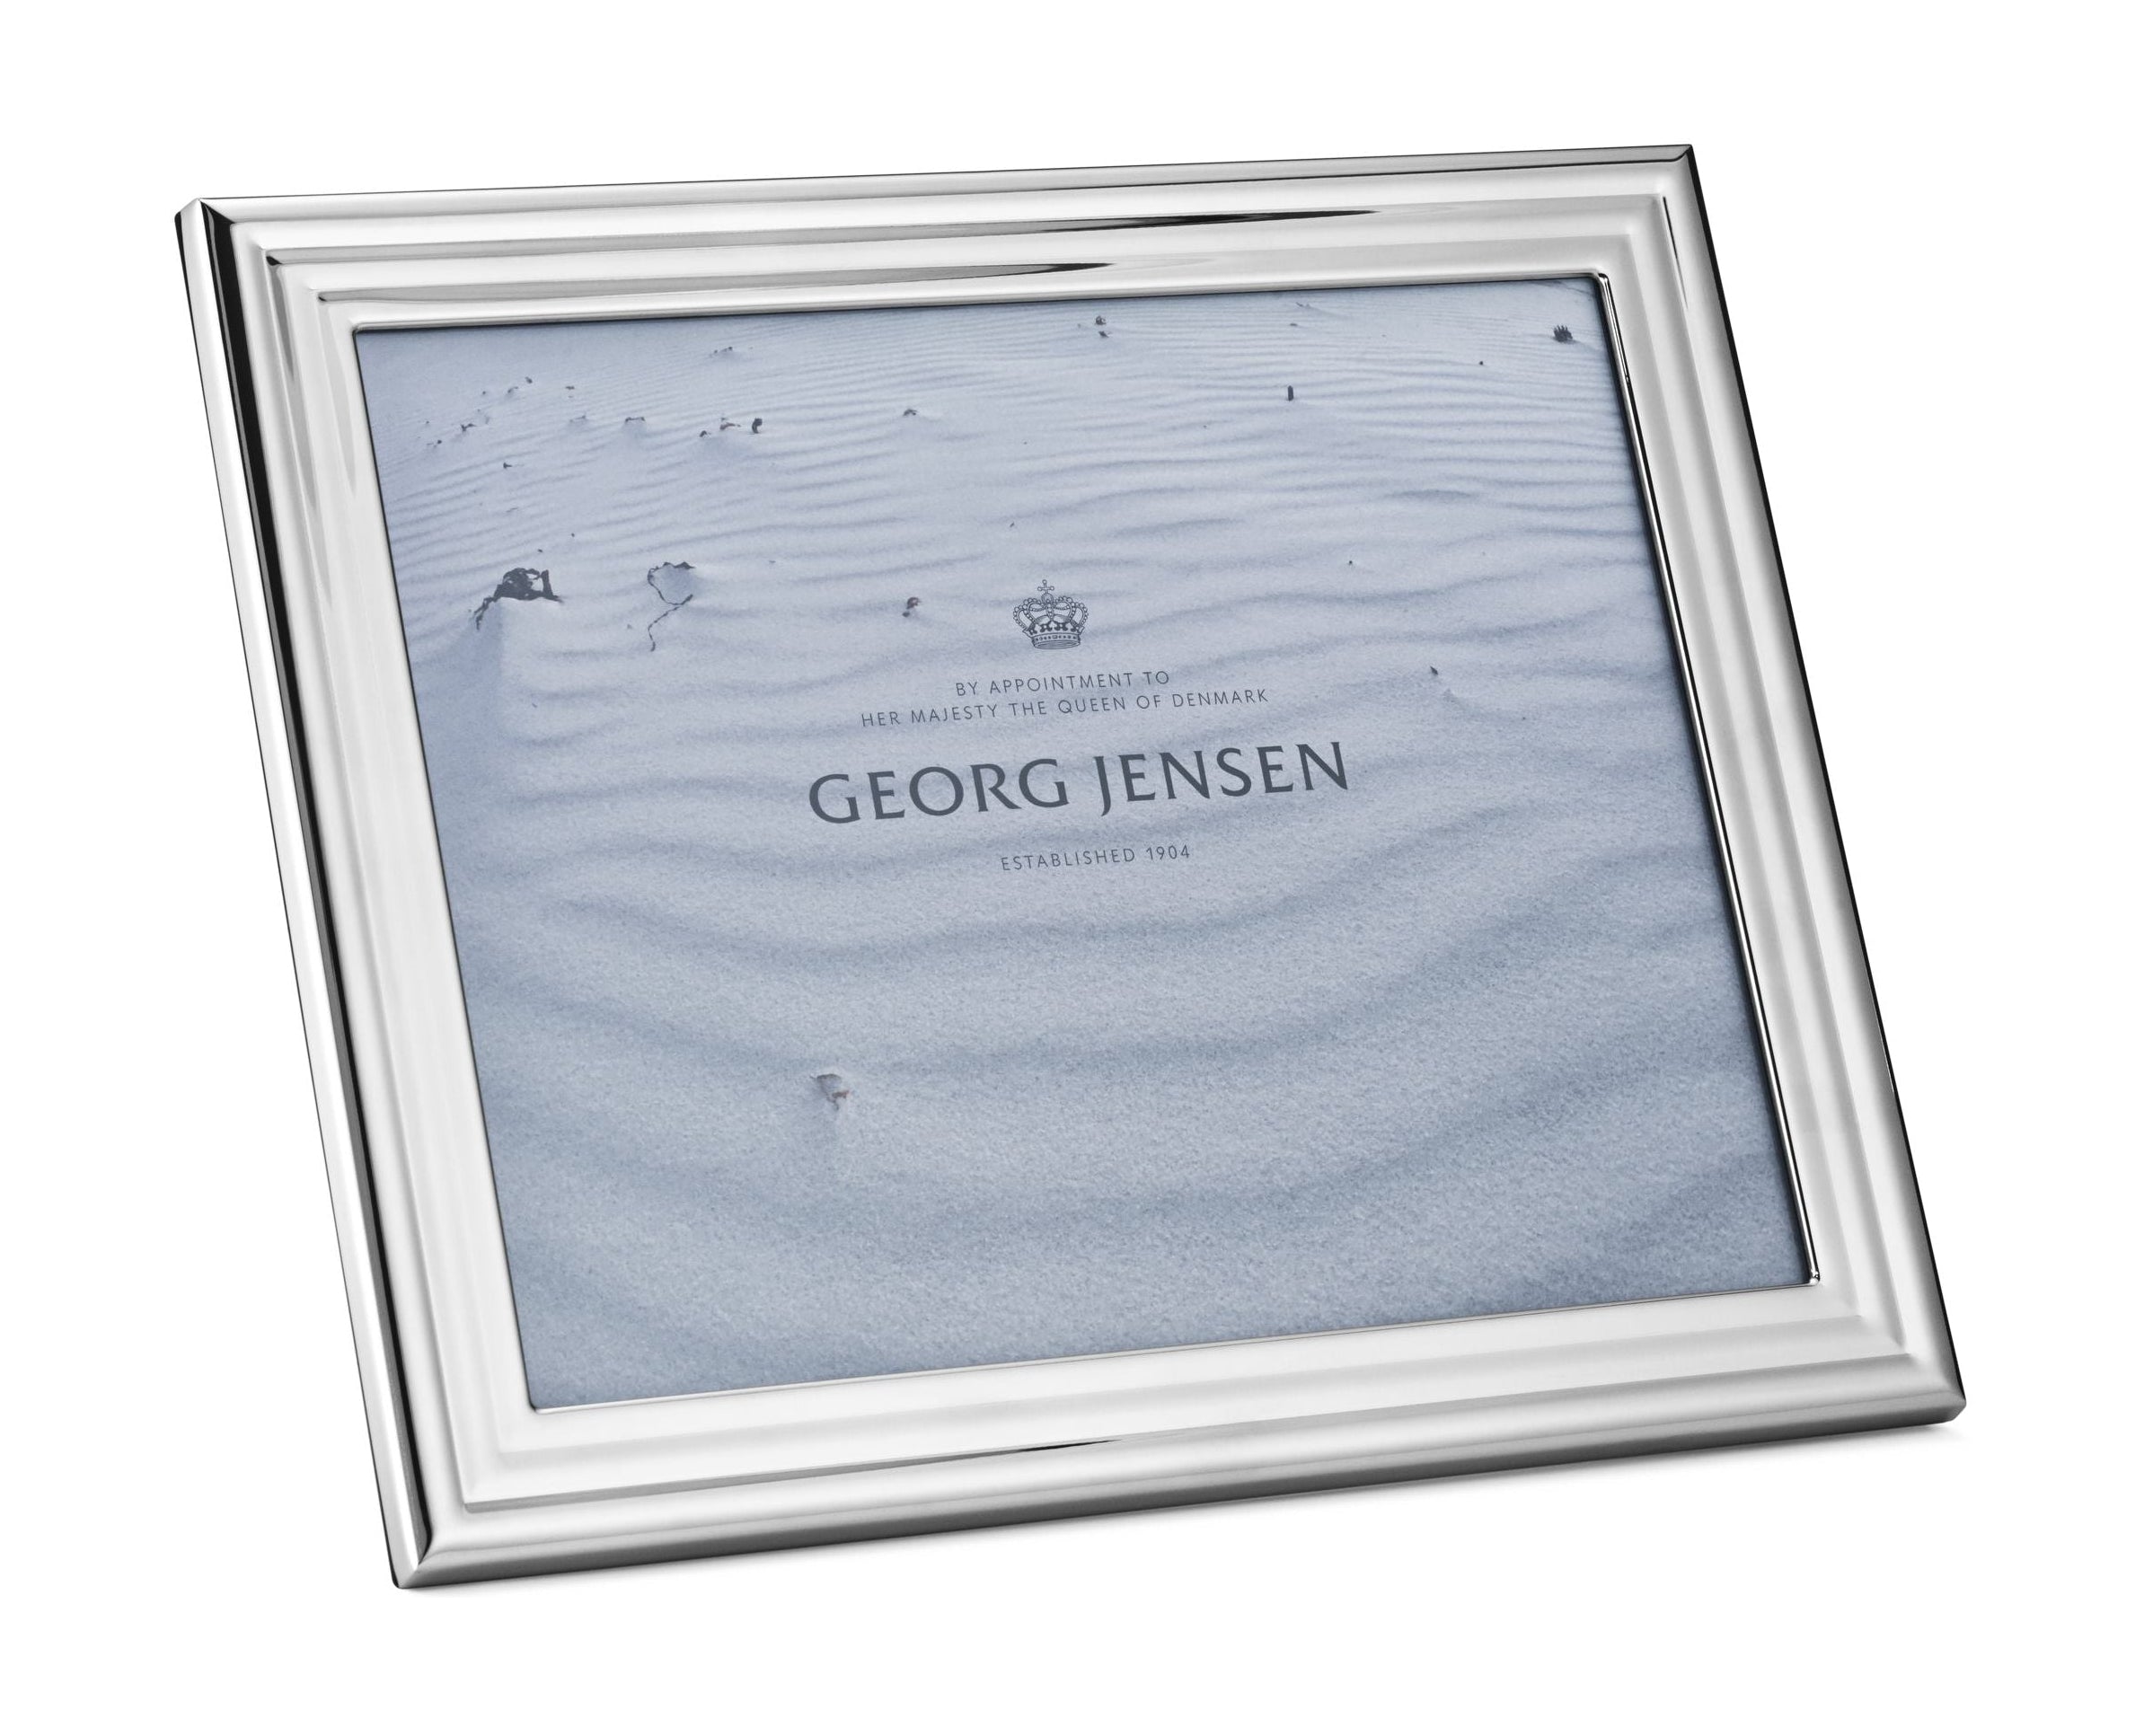 Georg Jensen Legacy Frame, 30 x 25 cm